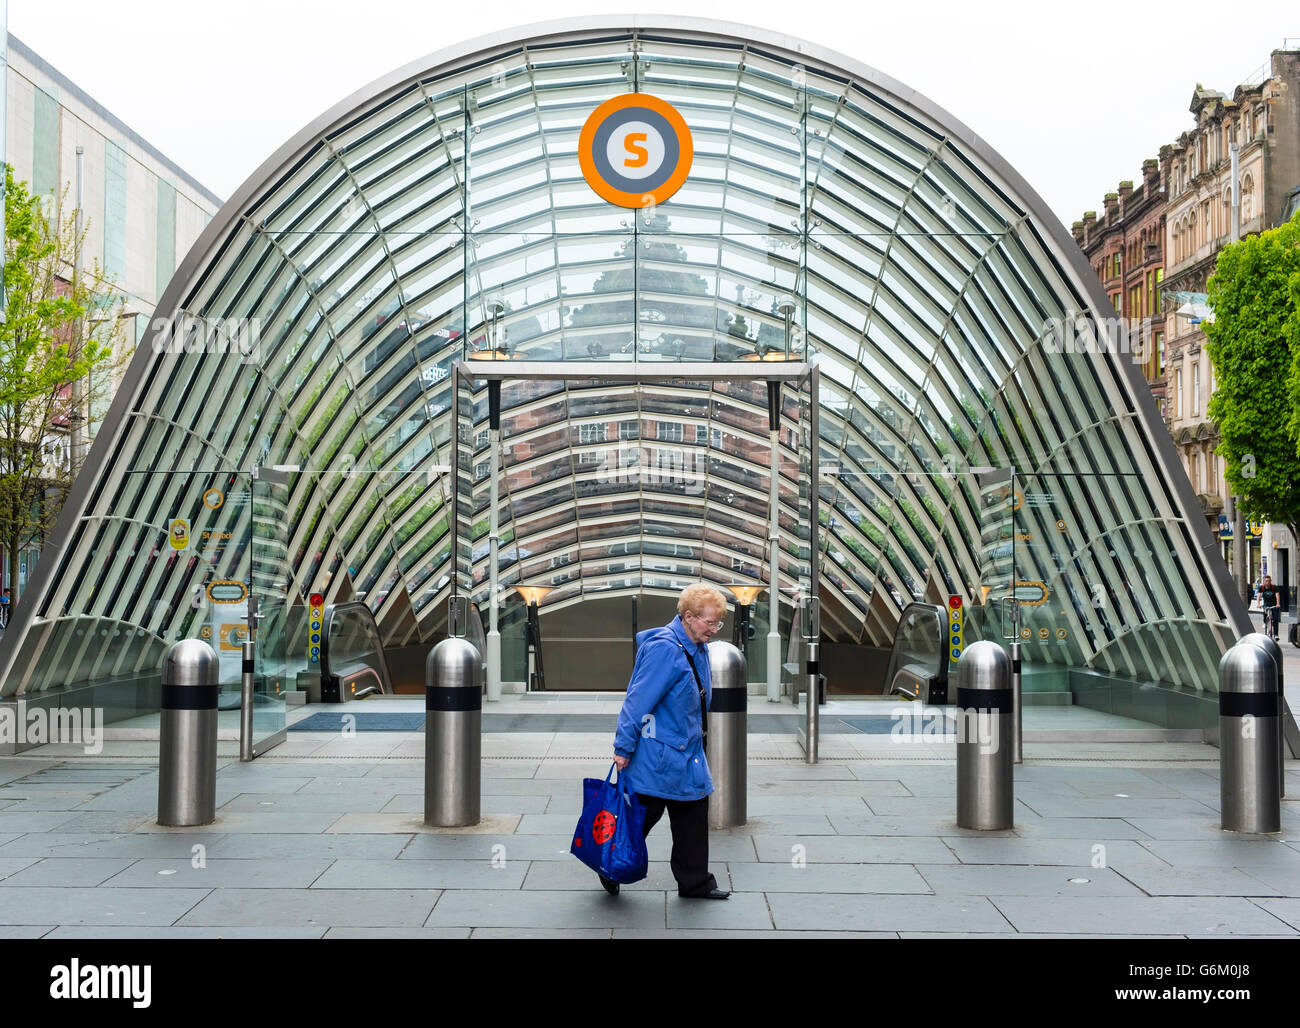 Exterior entrance to St Enoch Station on Glasgow underground system in Glasgow, Scotland, United Kingdom Stock Photo